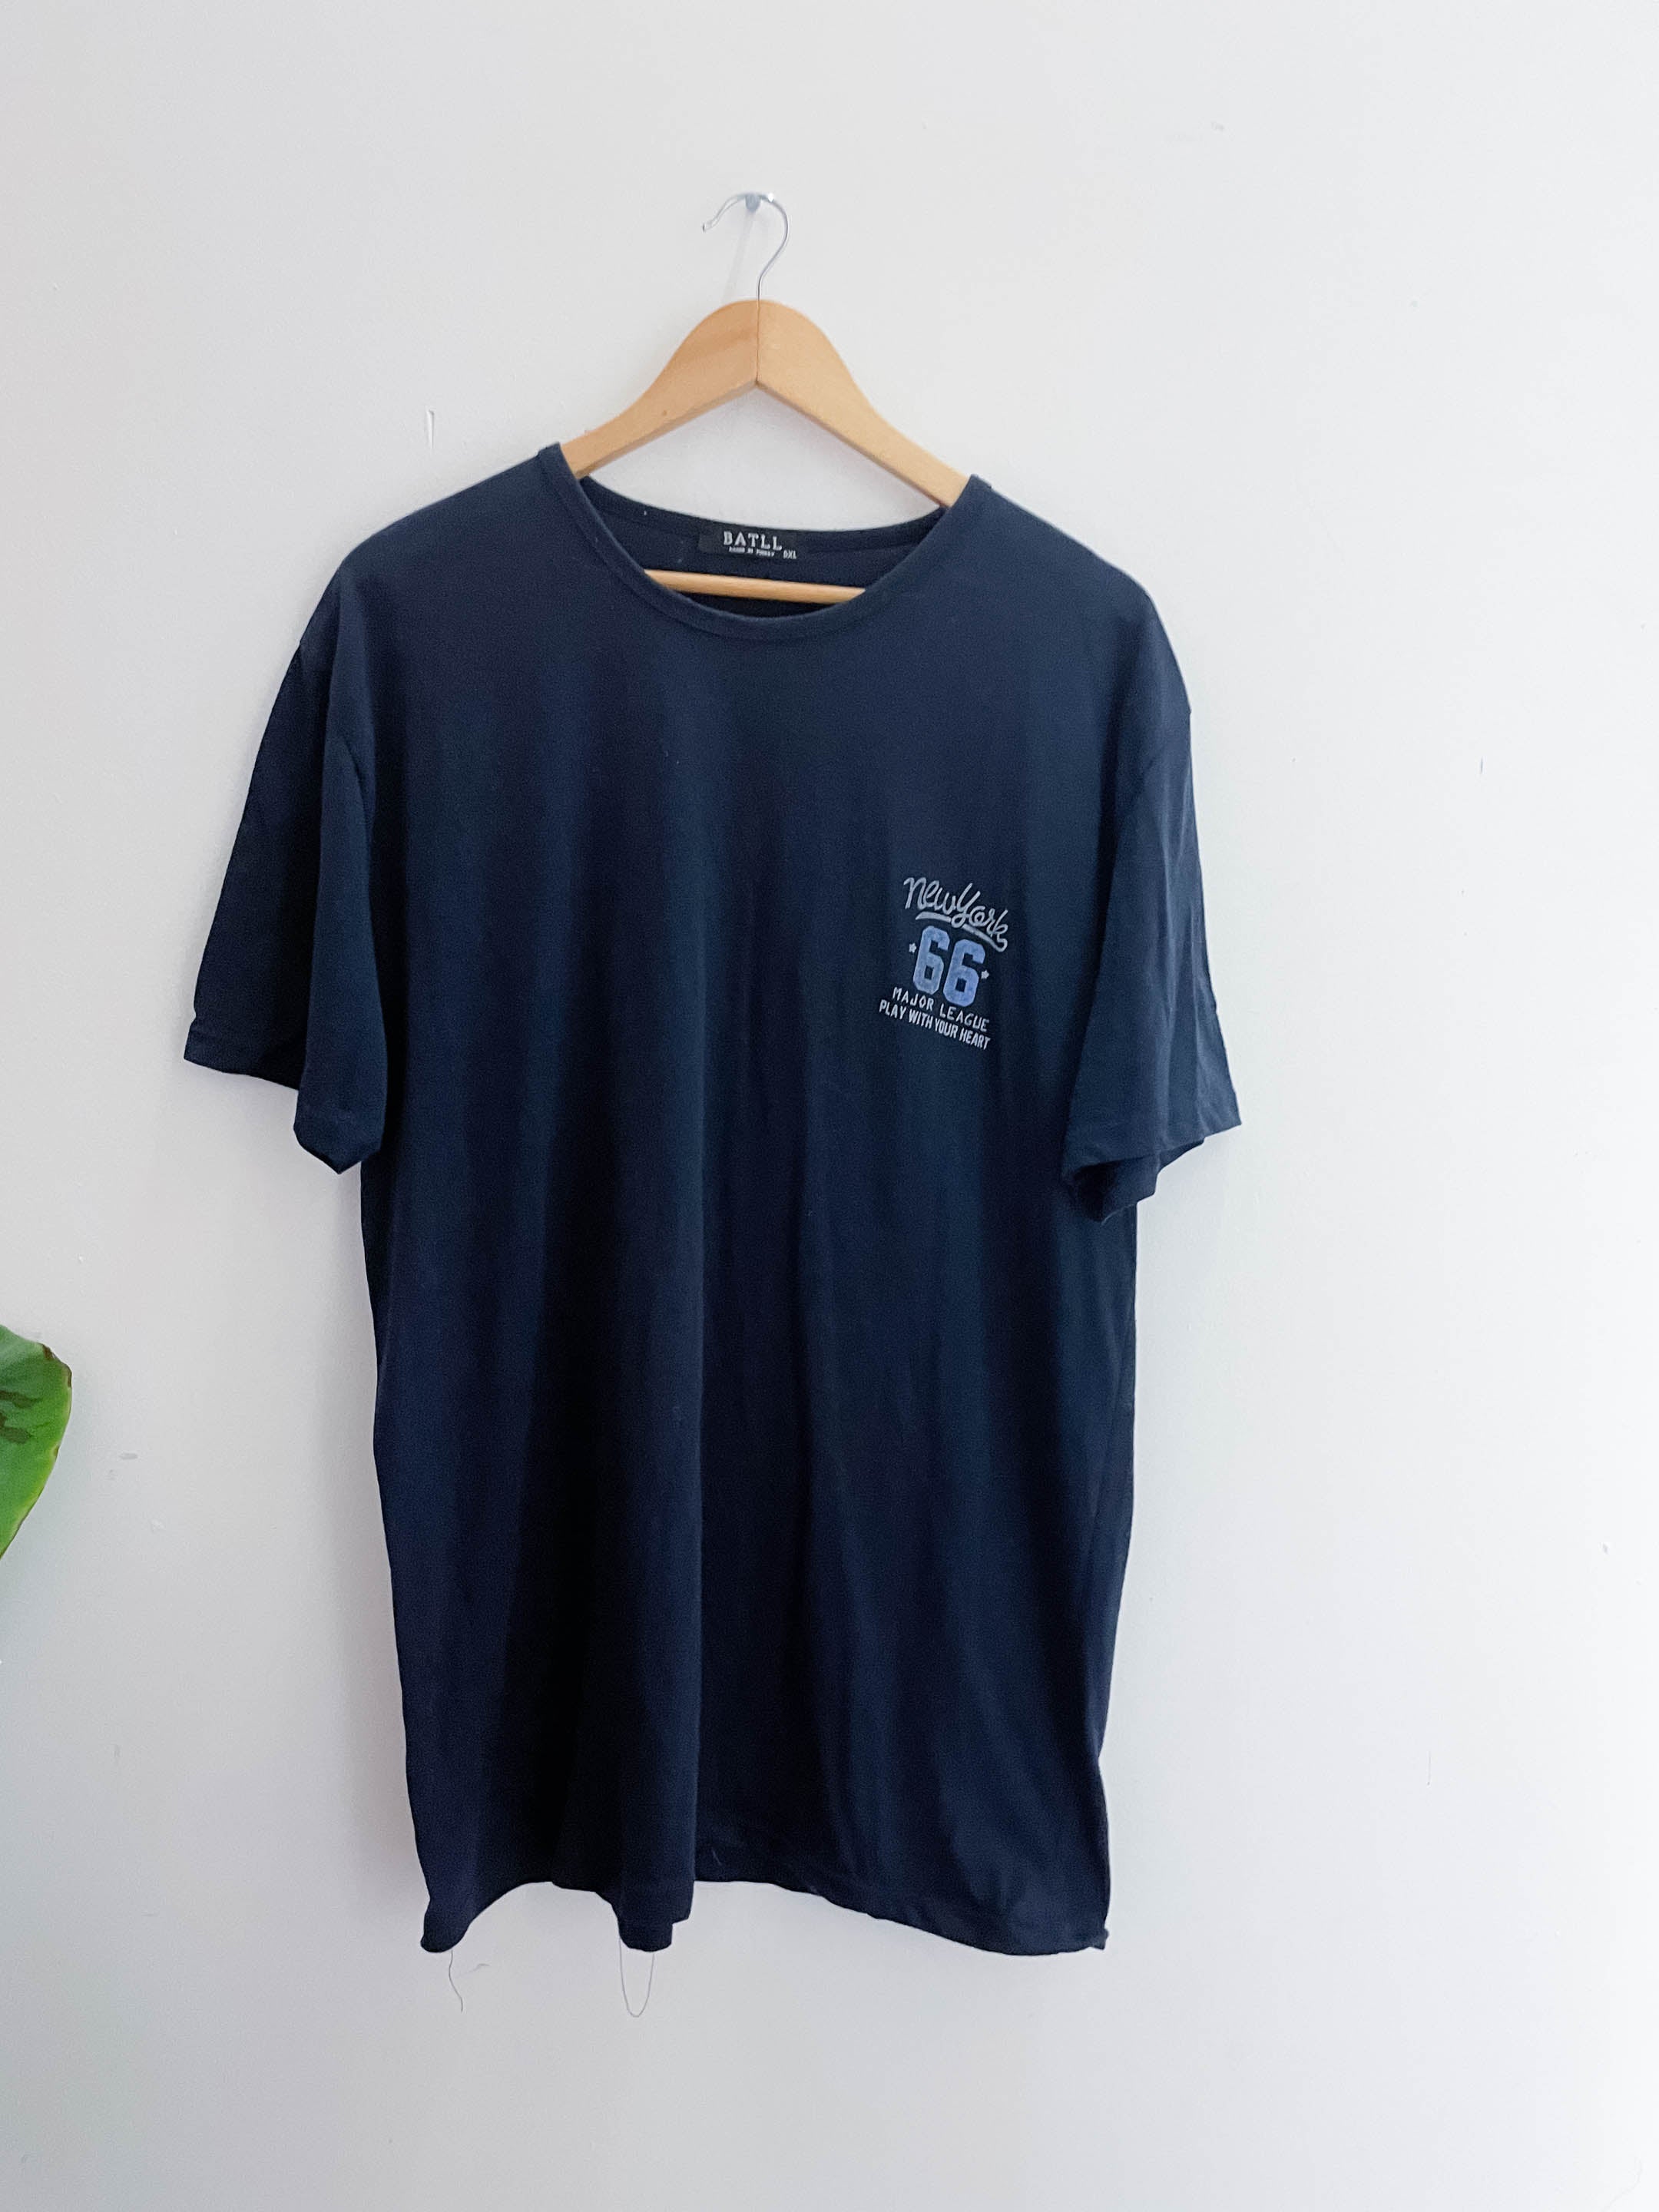 Vintage Battl with new york graphics design blue tshirt size 5XL